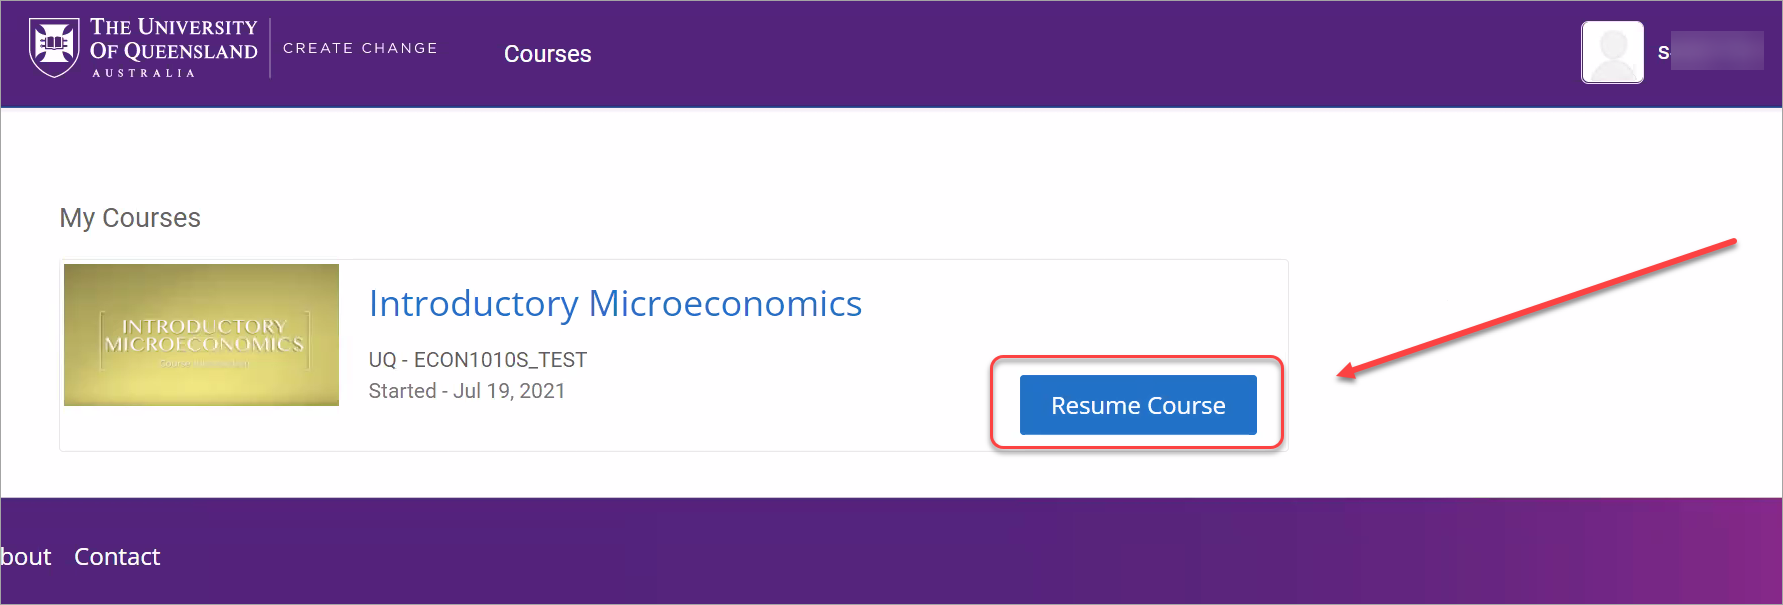 resume course button selected